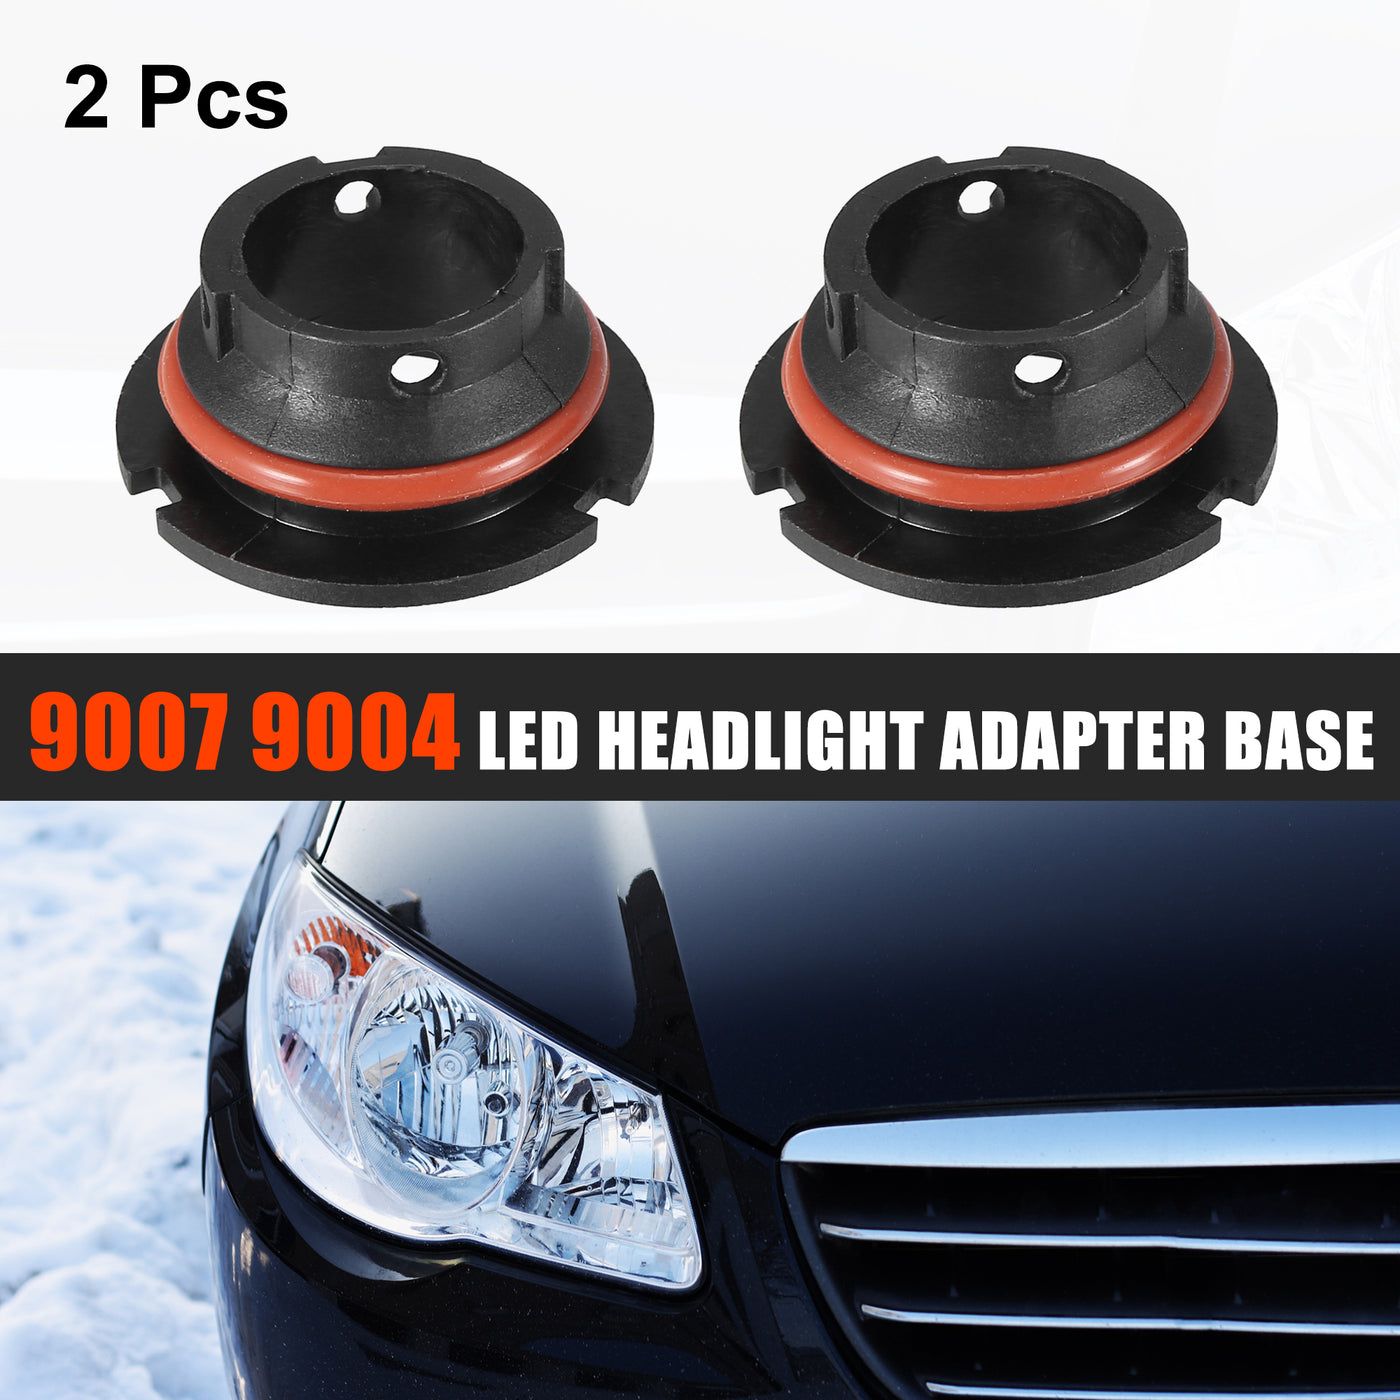 X AUTOHAUX 2pcs 9007 9004 LED Headlight Adapter Base Bulb Sockets Retainer Holder Universal for Car Black